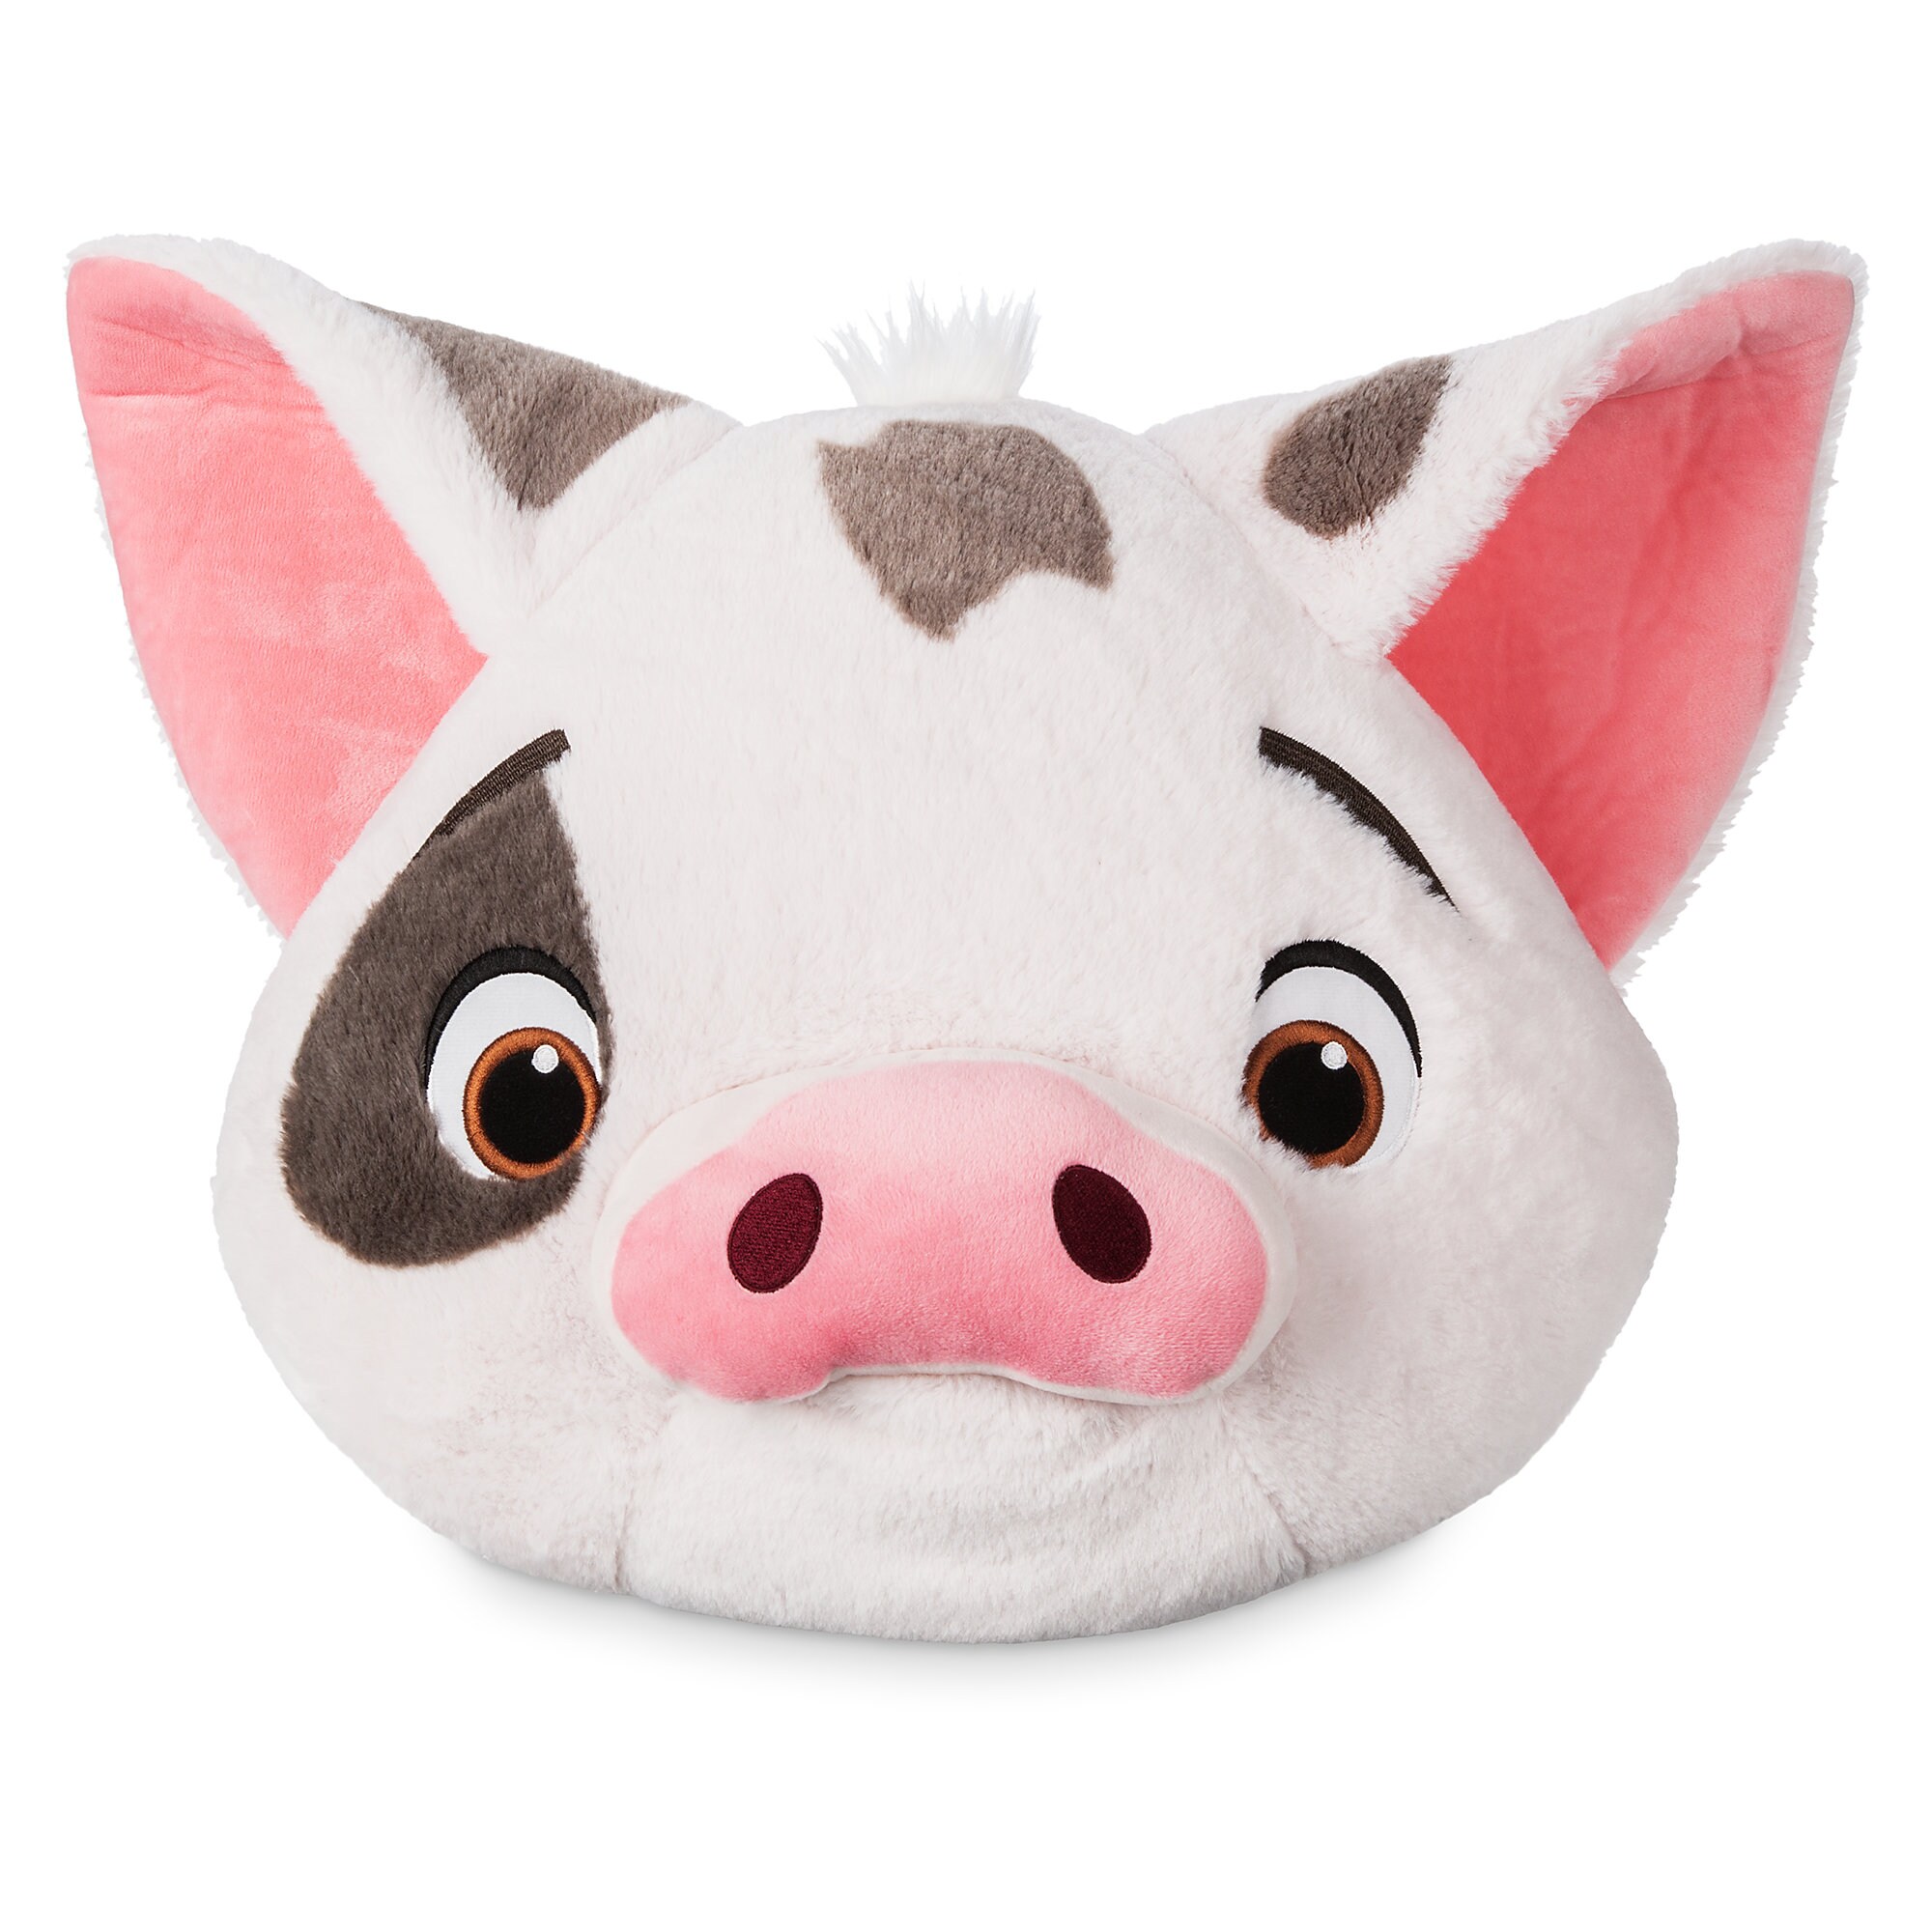 pua the pig stuffed animal